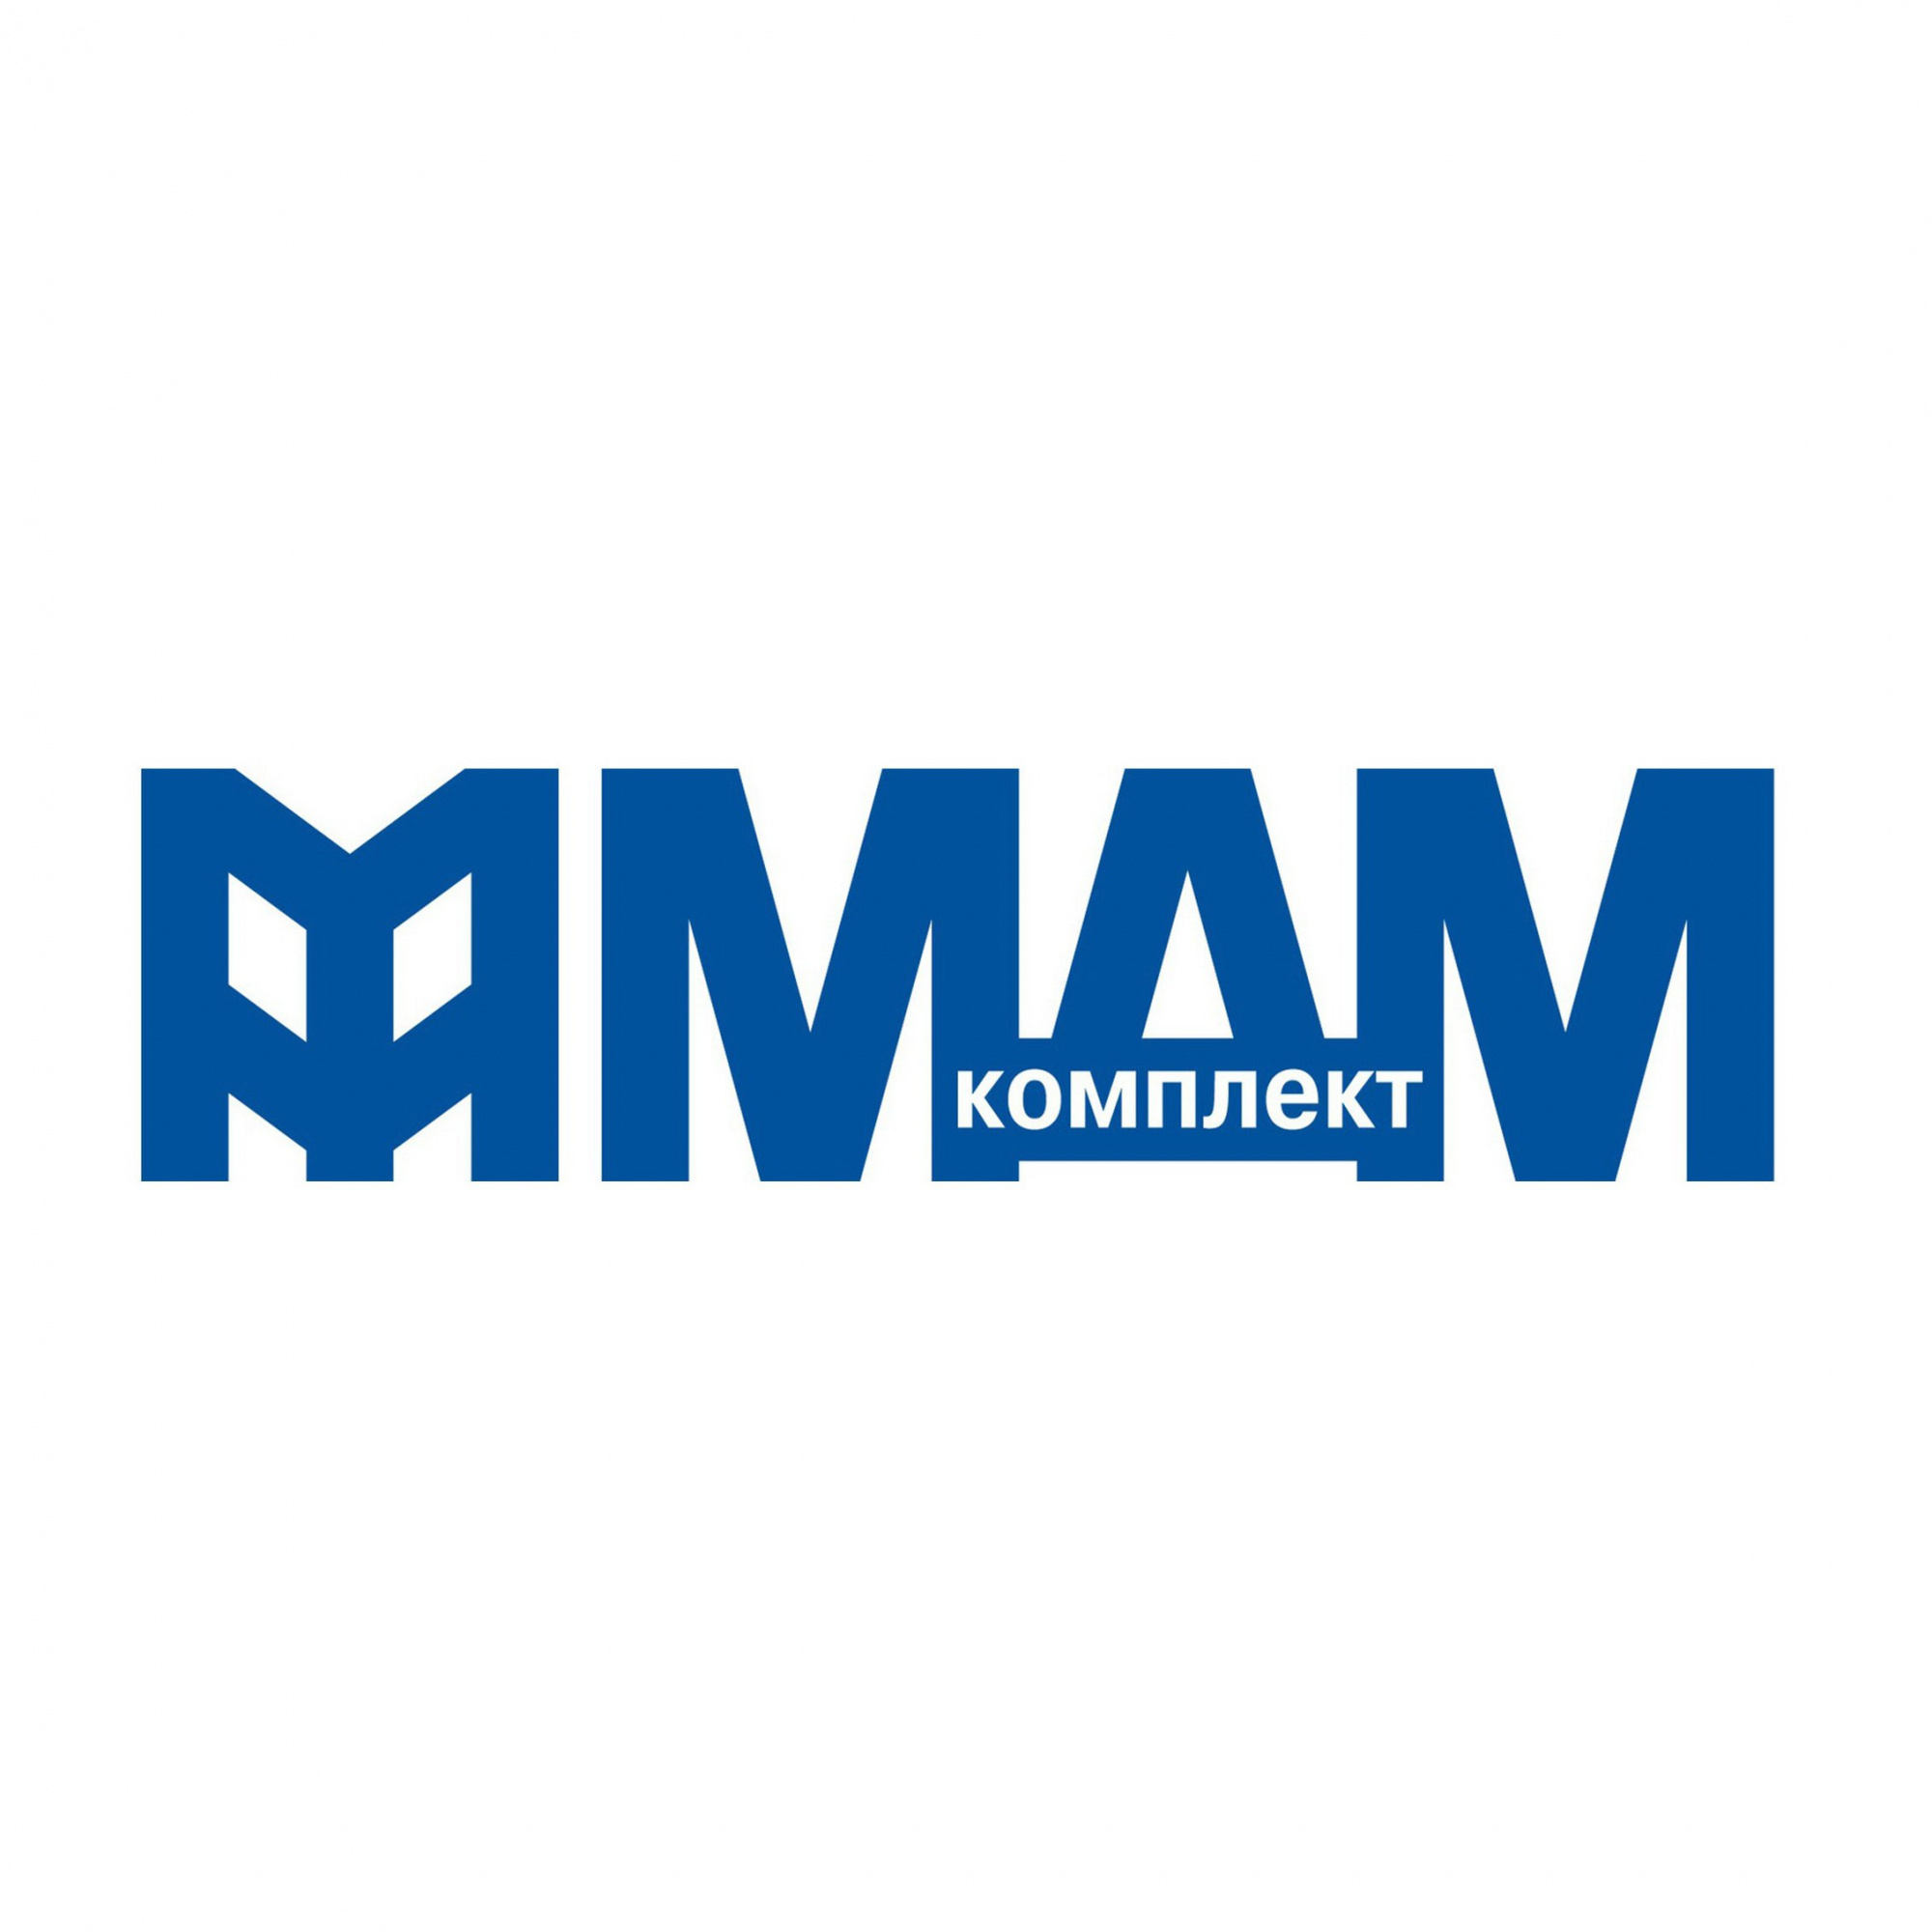 МДМ комплект. МДМ лого. МДМ фурнитура логотип. МДМ комплект фурнитура логотип.